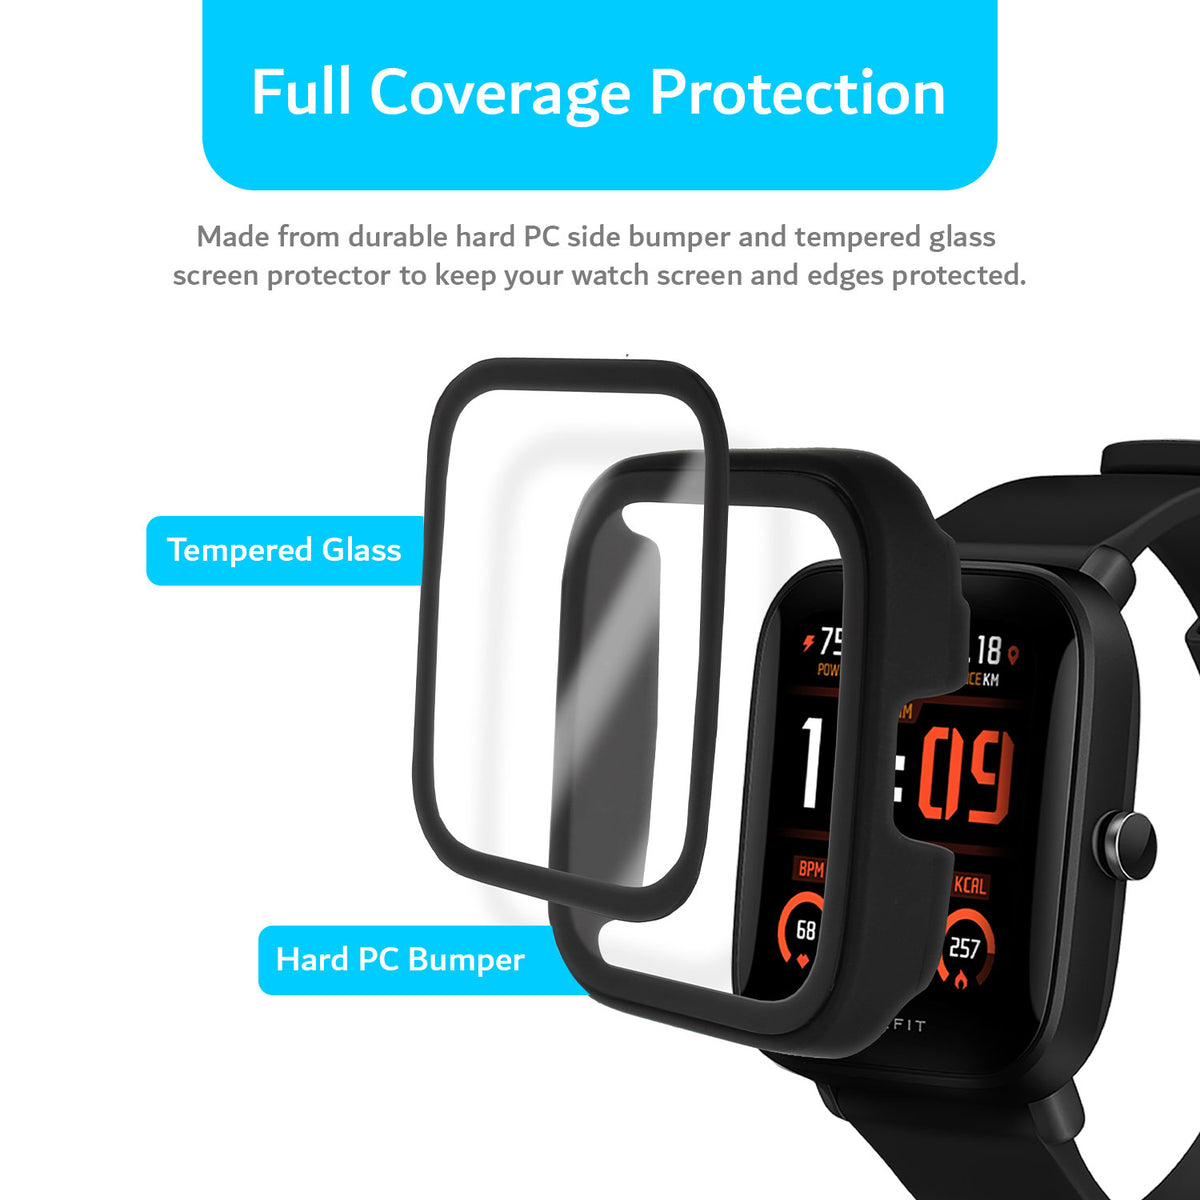 Smartwatch Xiaomi Amazfit Bip U Pro - mi store